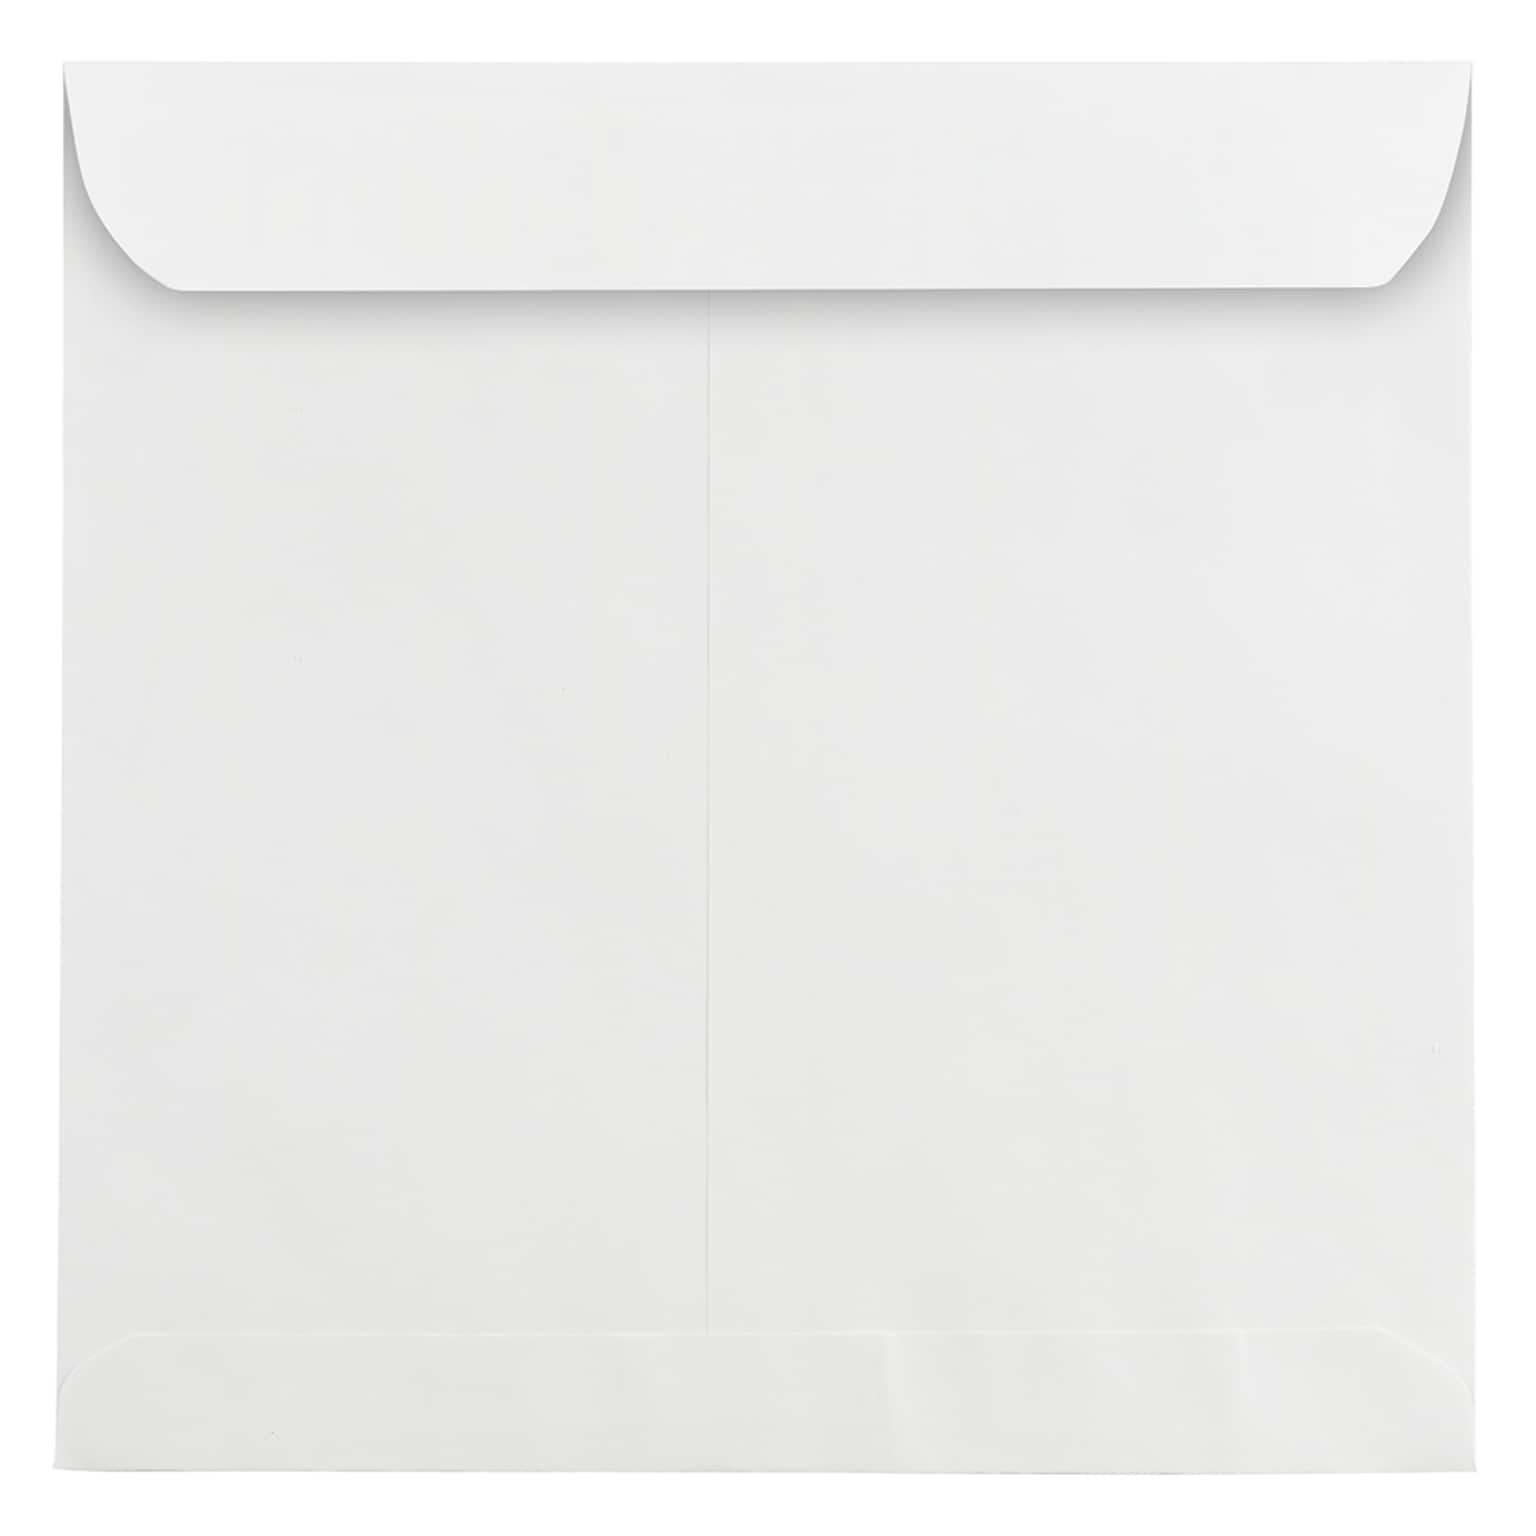 JAM Paper 13 1/2 Square Invitation Envelope, 13 1/2 x 13 1/2, White, 25/Pack (3992323)